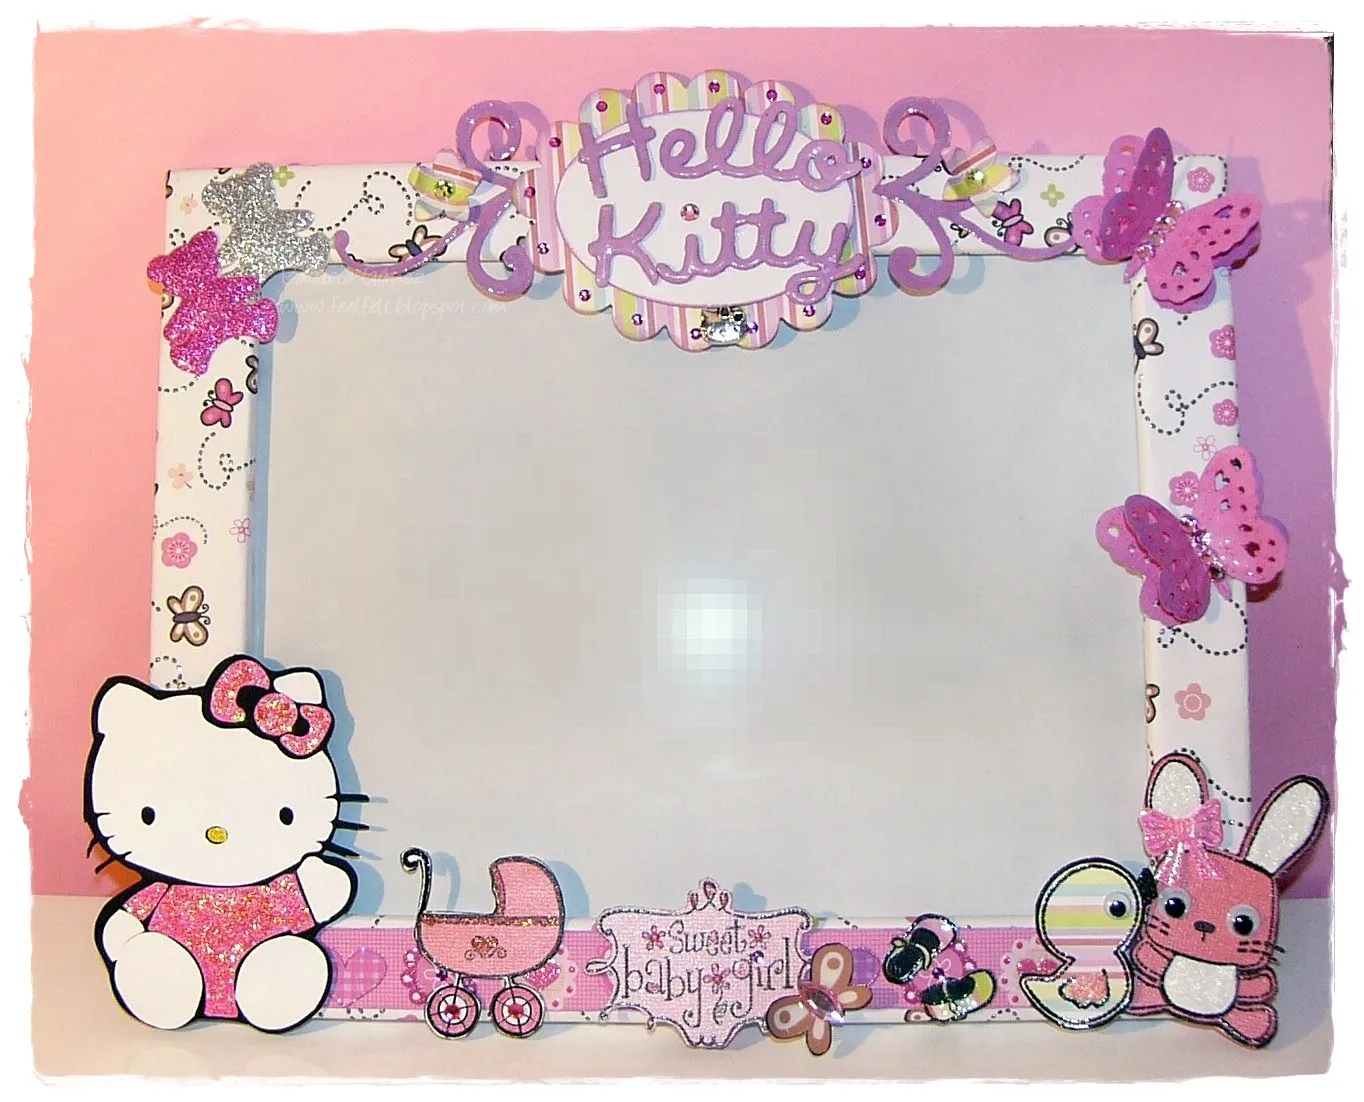 Feel&Felt: Hello Kitty Frame